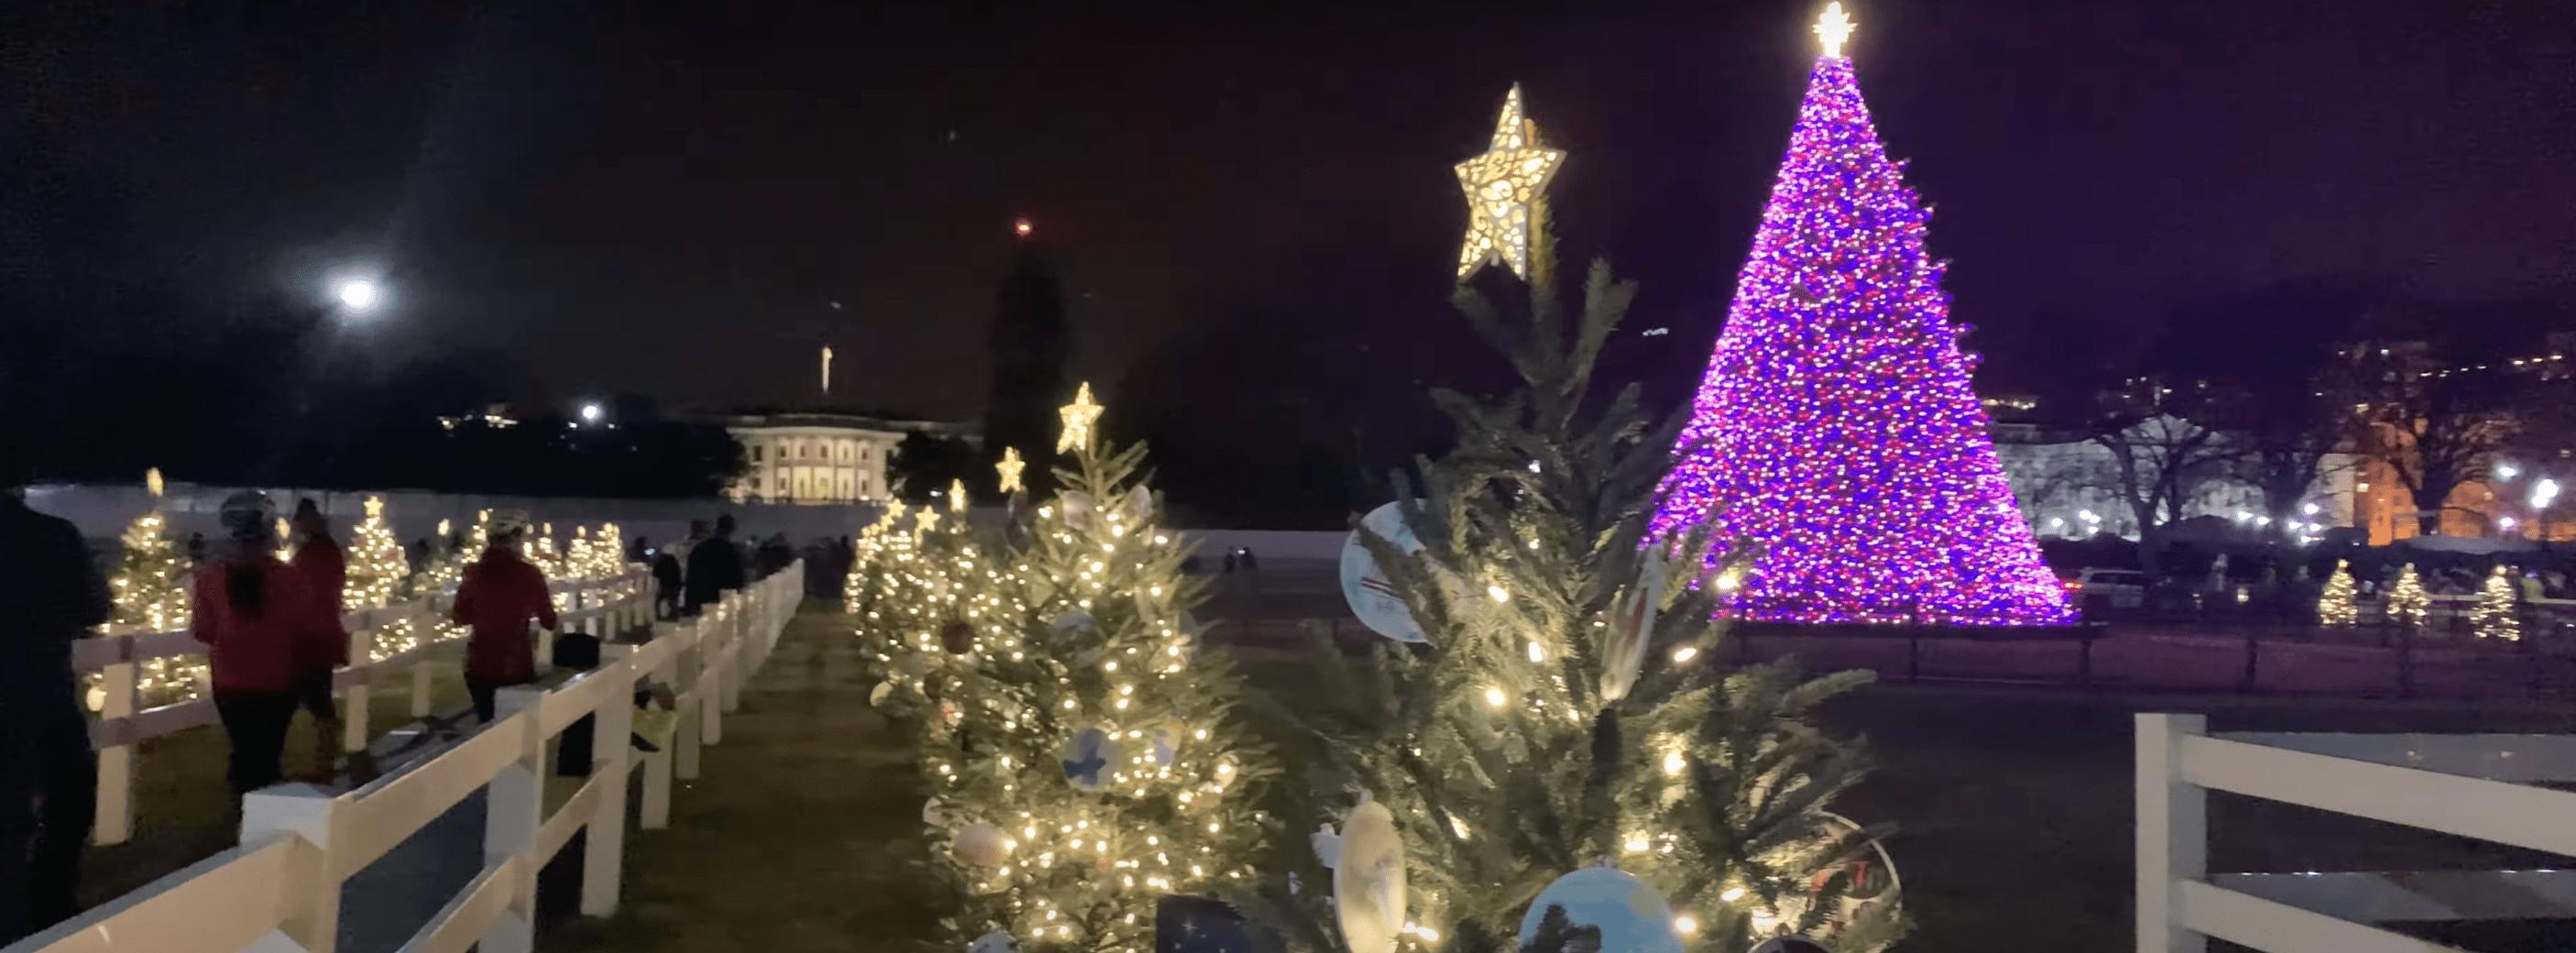 white house christmas tree lighting 2021 tickets